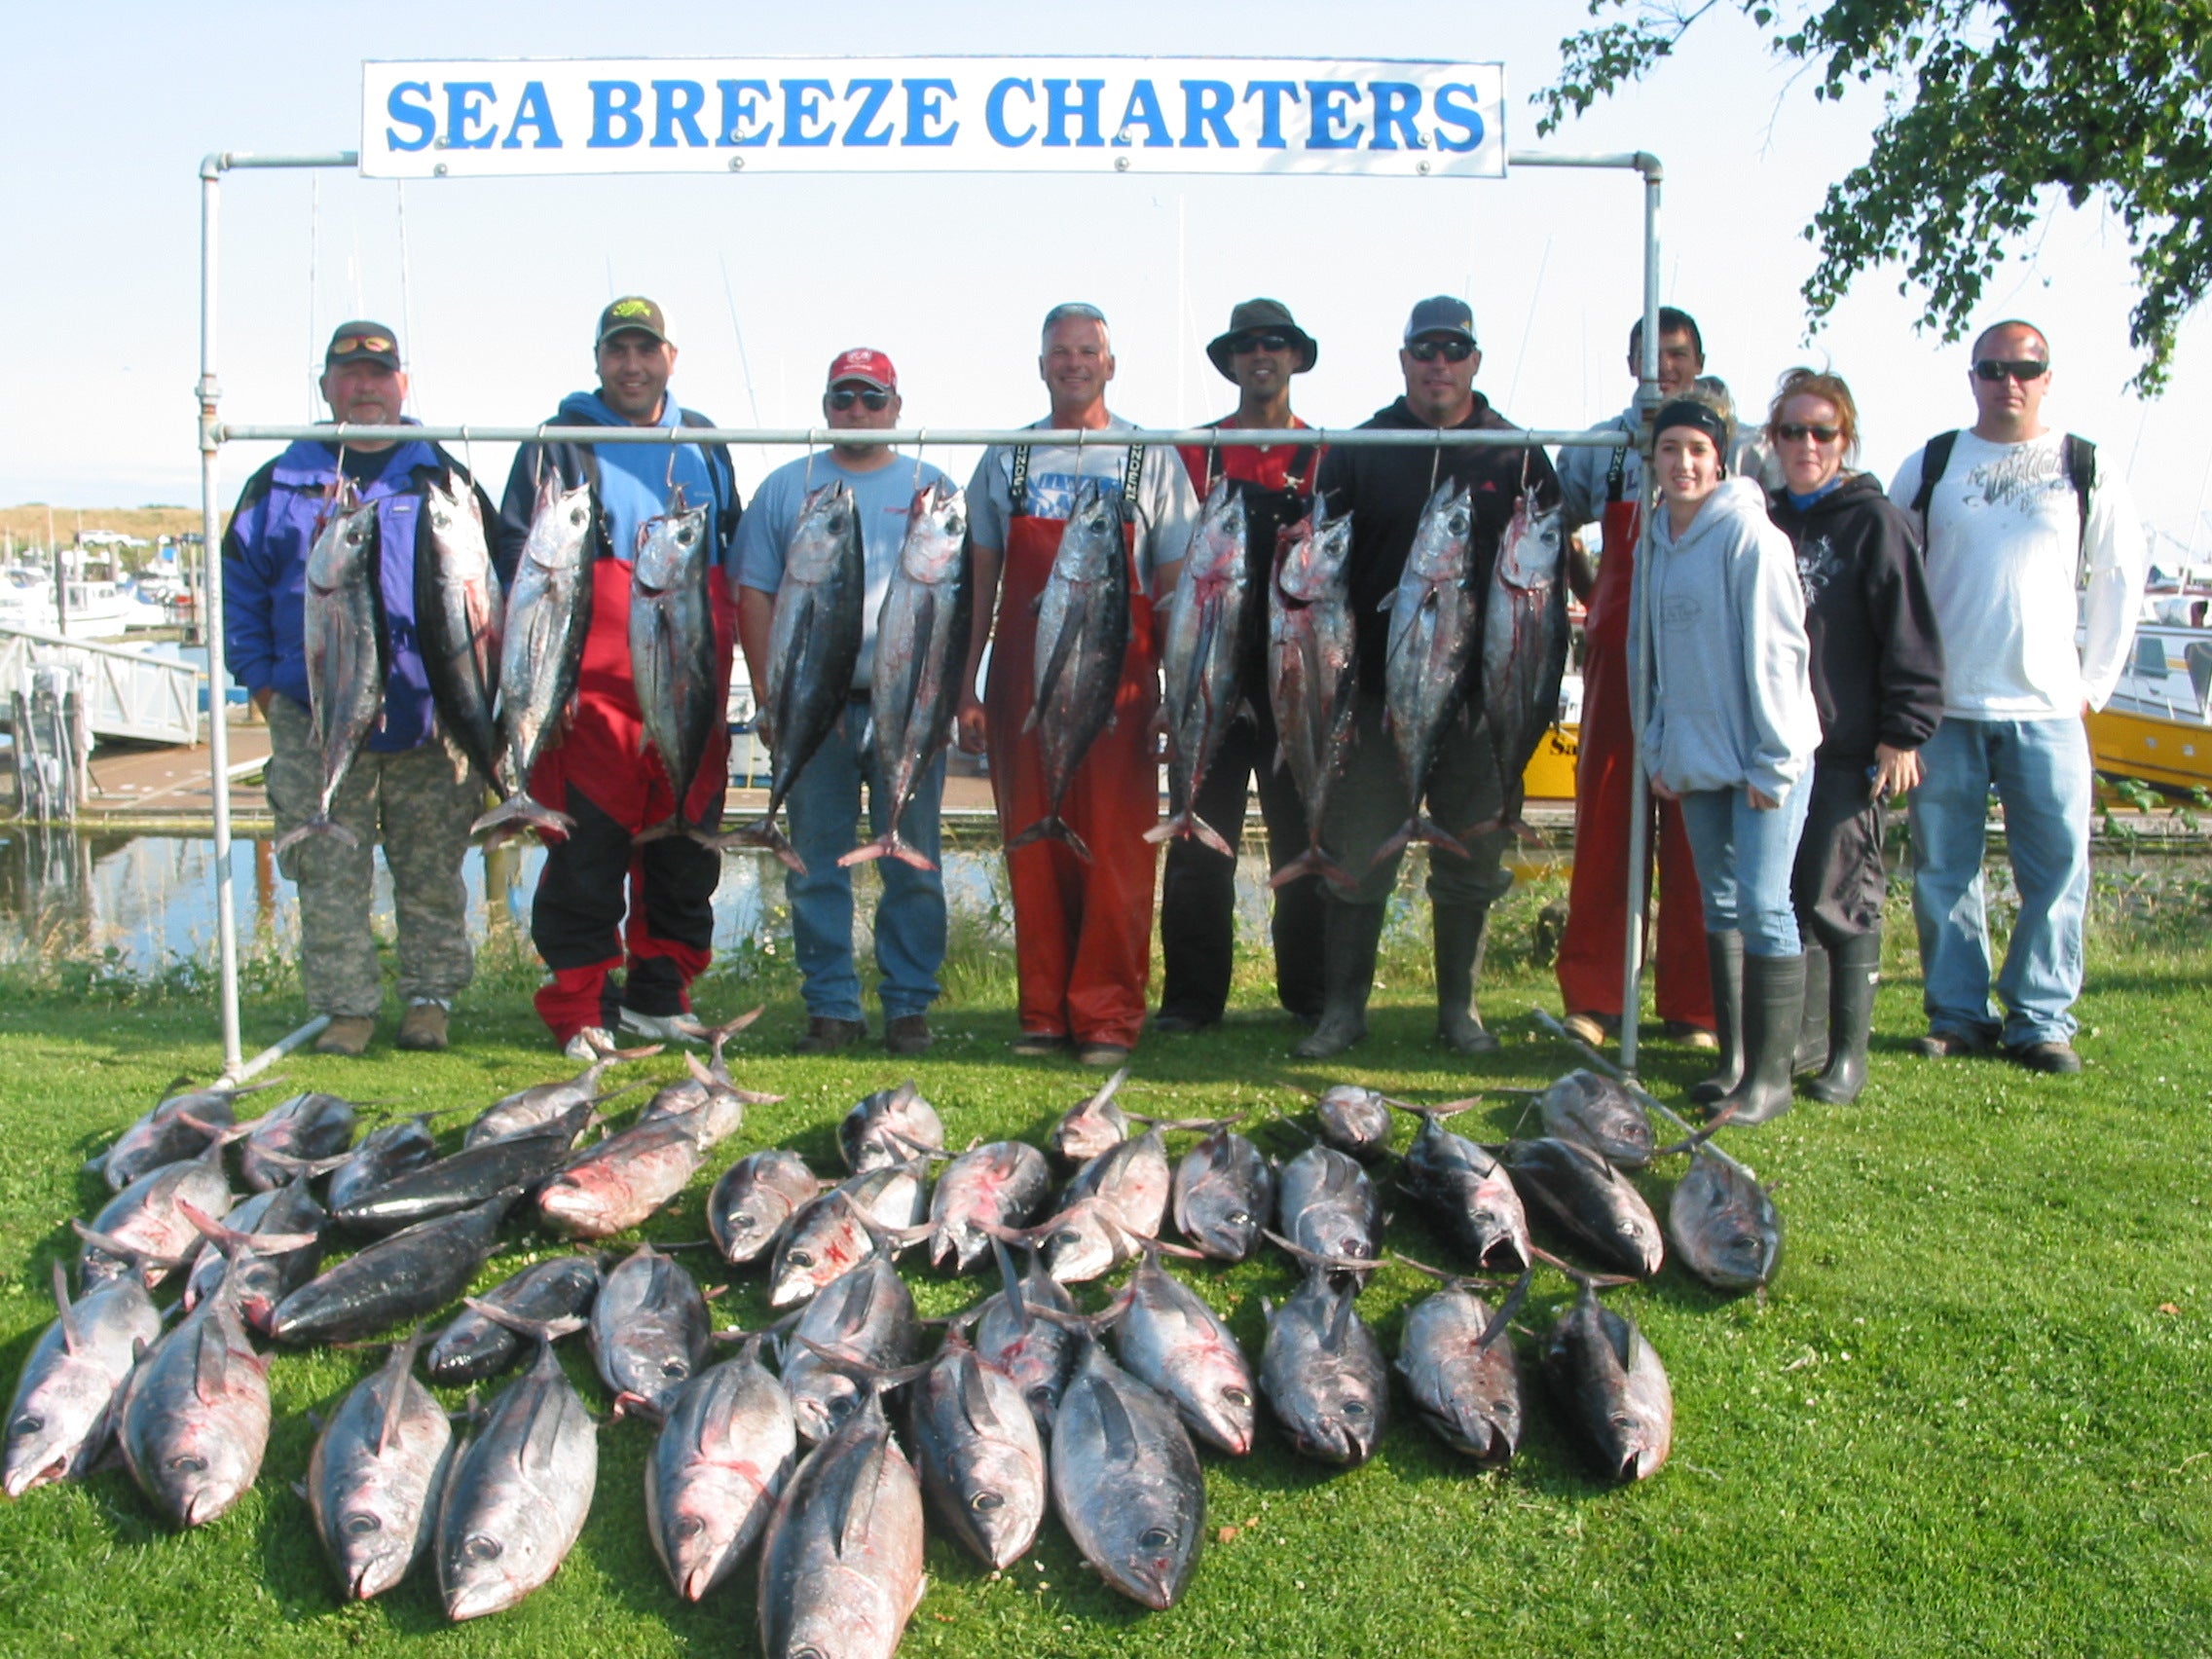 Albacore tuna  Washington Department of Fish & Wildlife